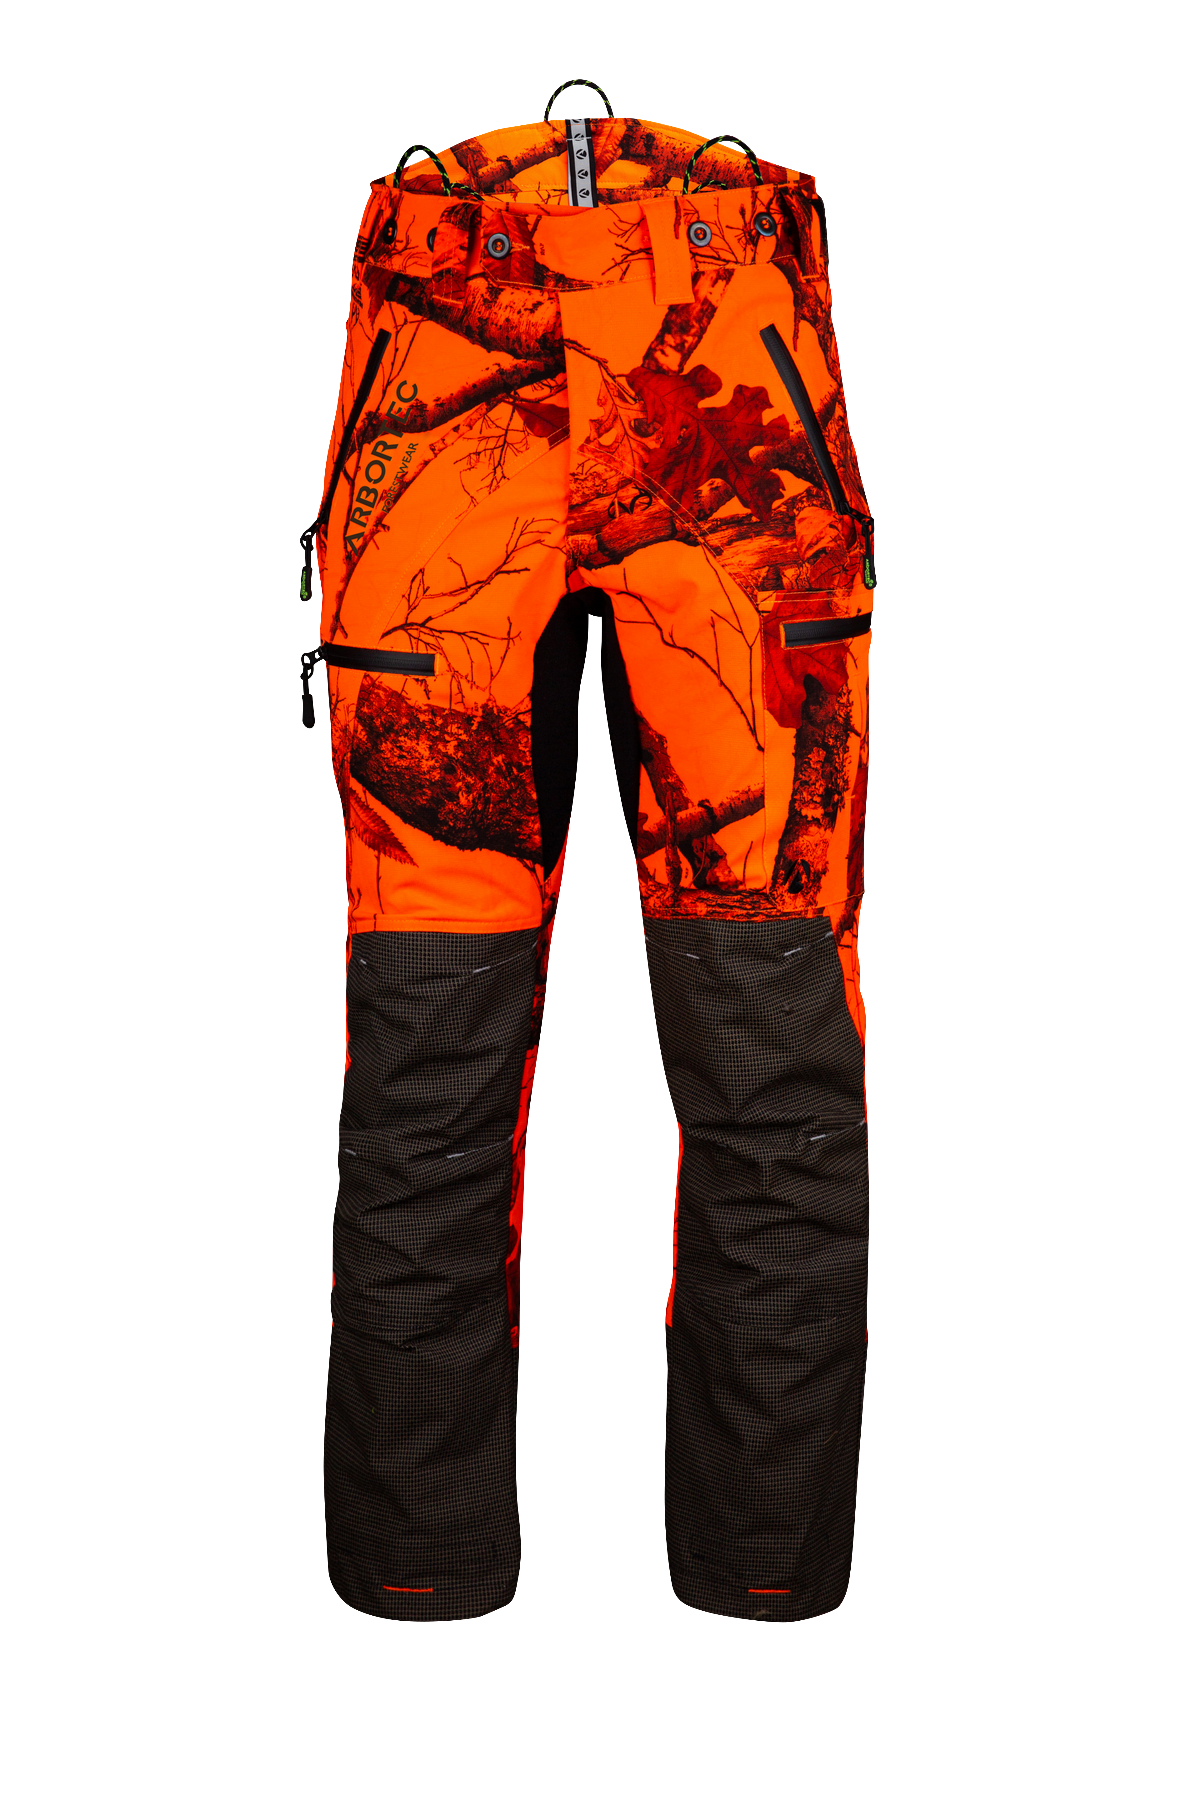 AT4070 - Breatheflex Pro Realtree Chainsaw Trousers Design C/Class 1 - Orange